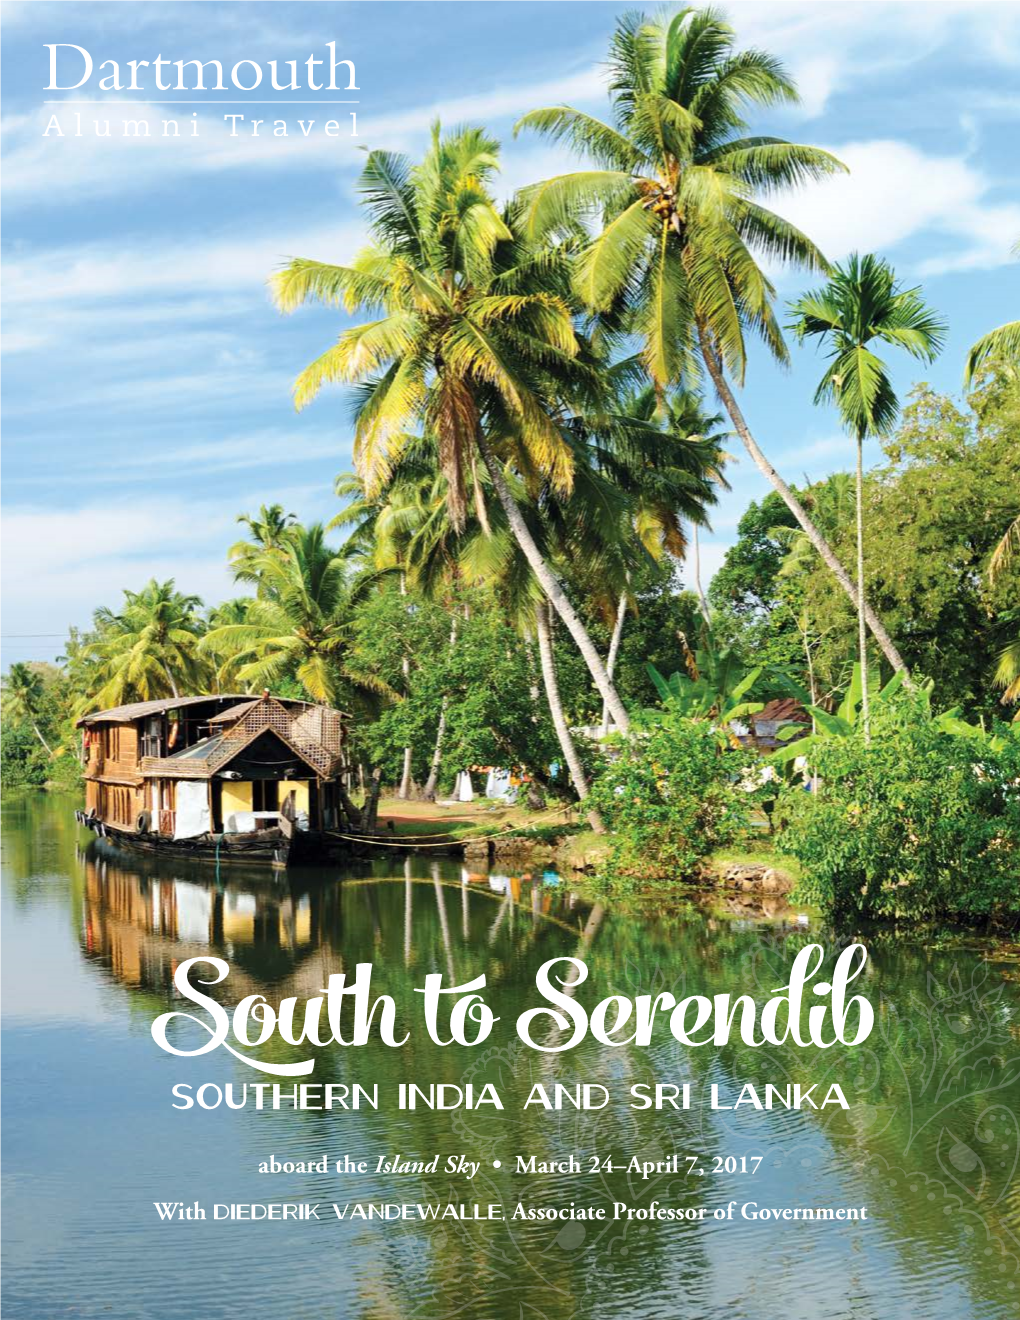 Southern India and Sri Lanka